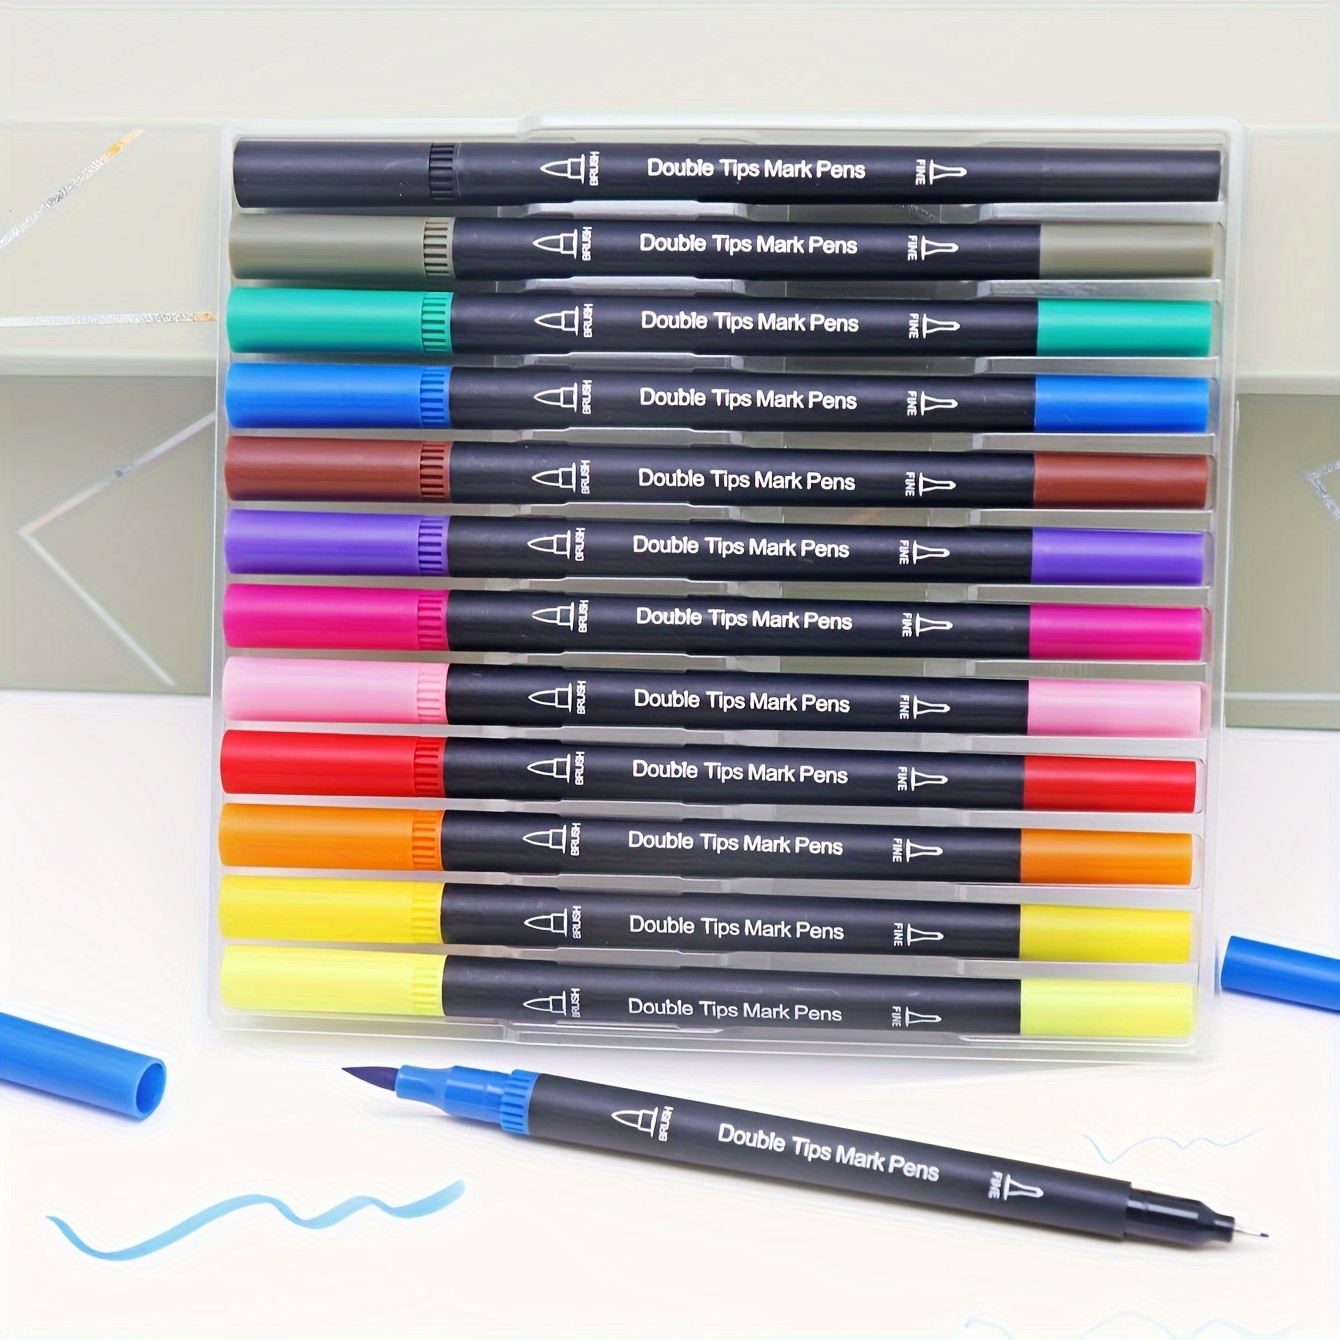 Morandi Journal Planner Pens Colorful 0.5mm Markers Fine Tip Drawing Pens  Porous Fineliner Pen for Bullet Journaling Writing Note Taking Coloring Art